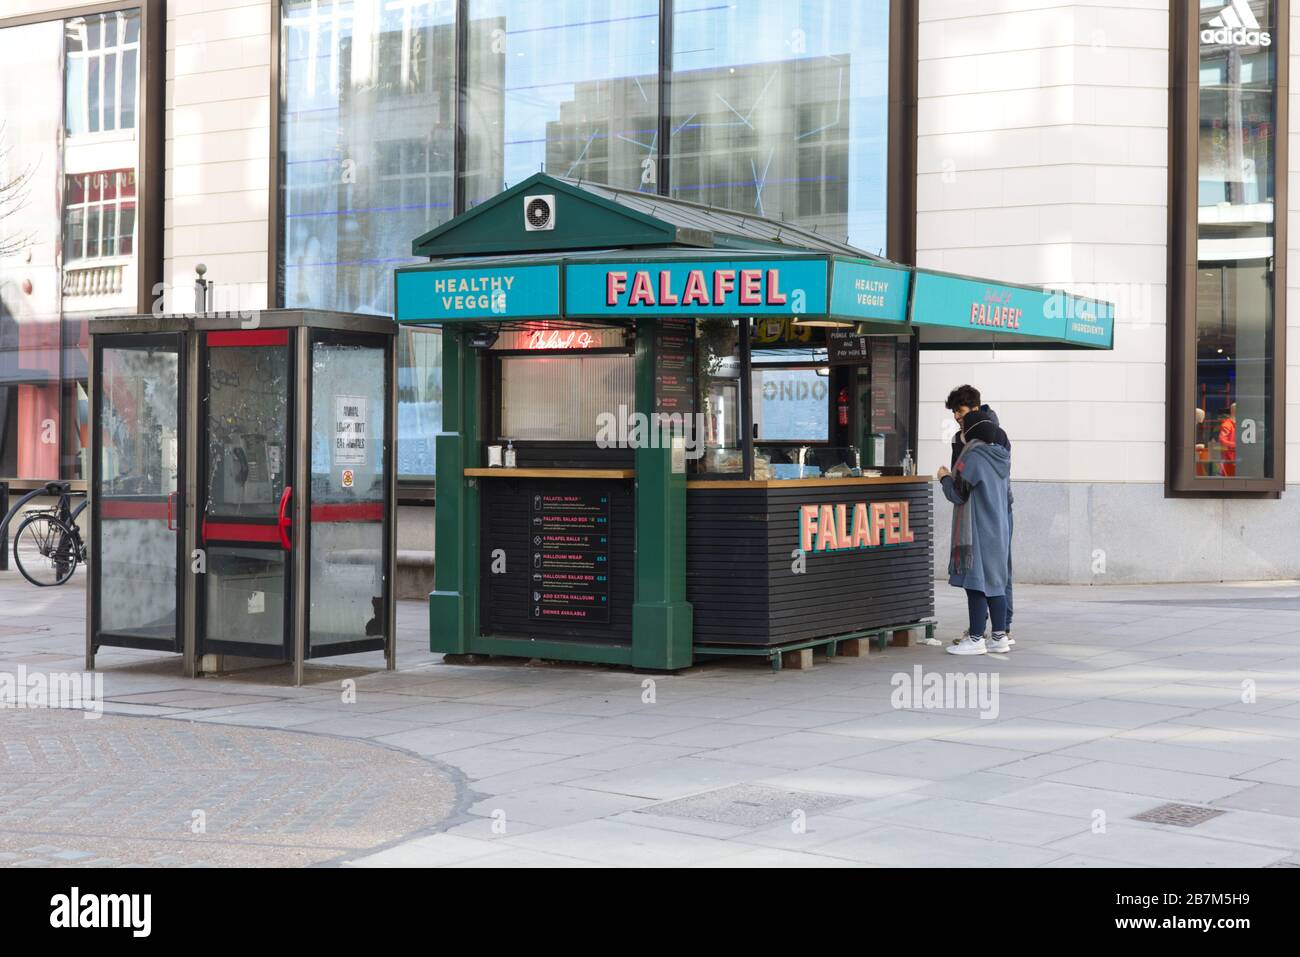 masked people at the Falafel kiosk, Oxford street london Stock Photo